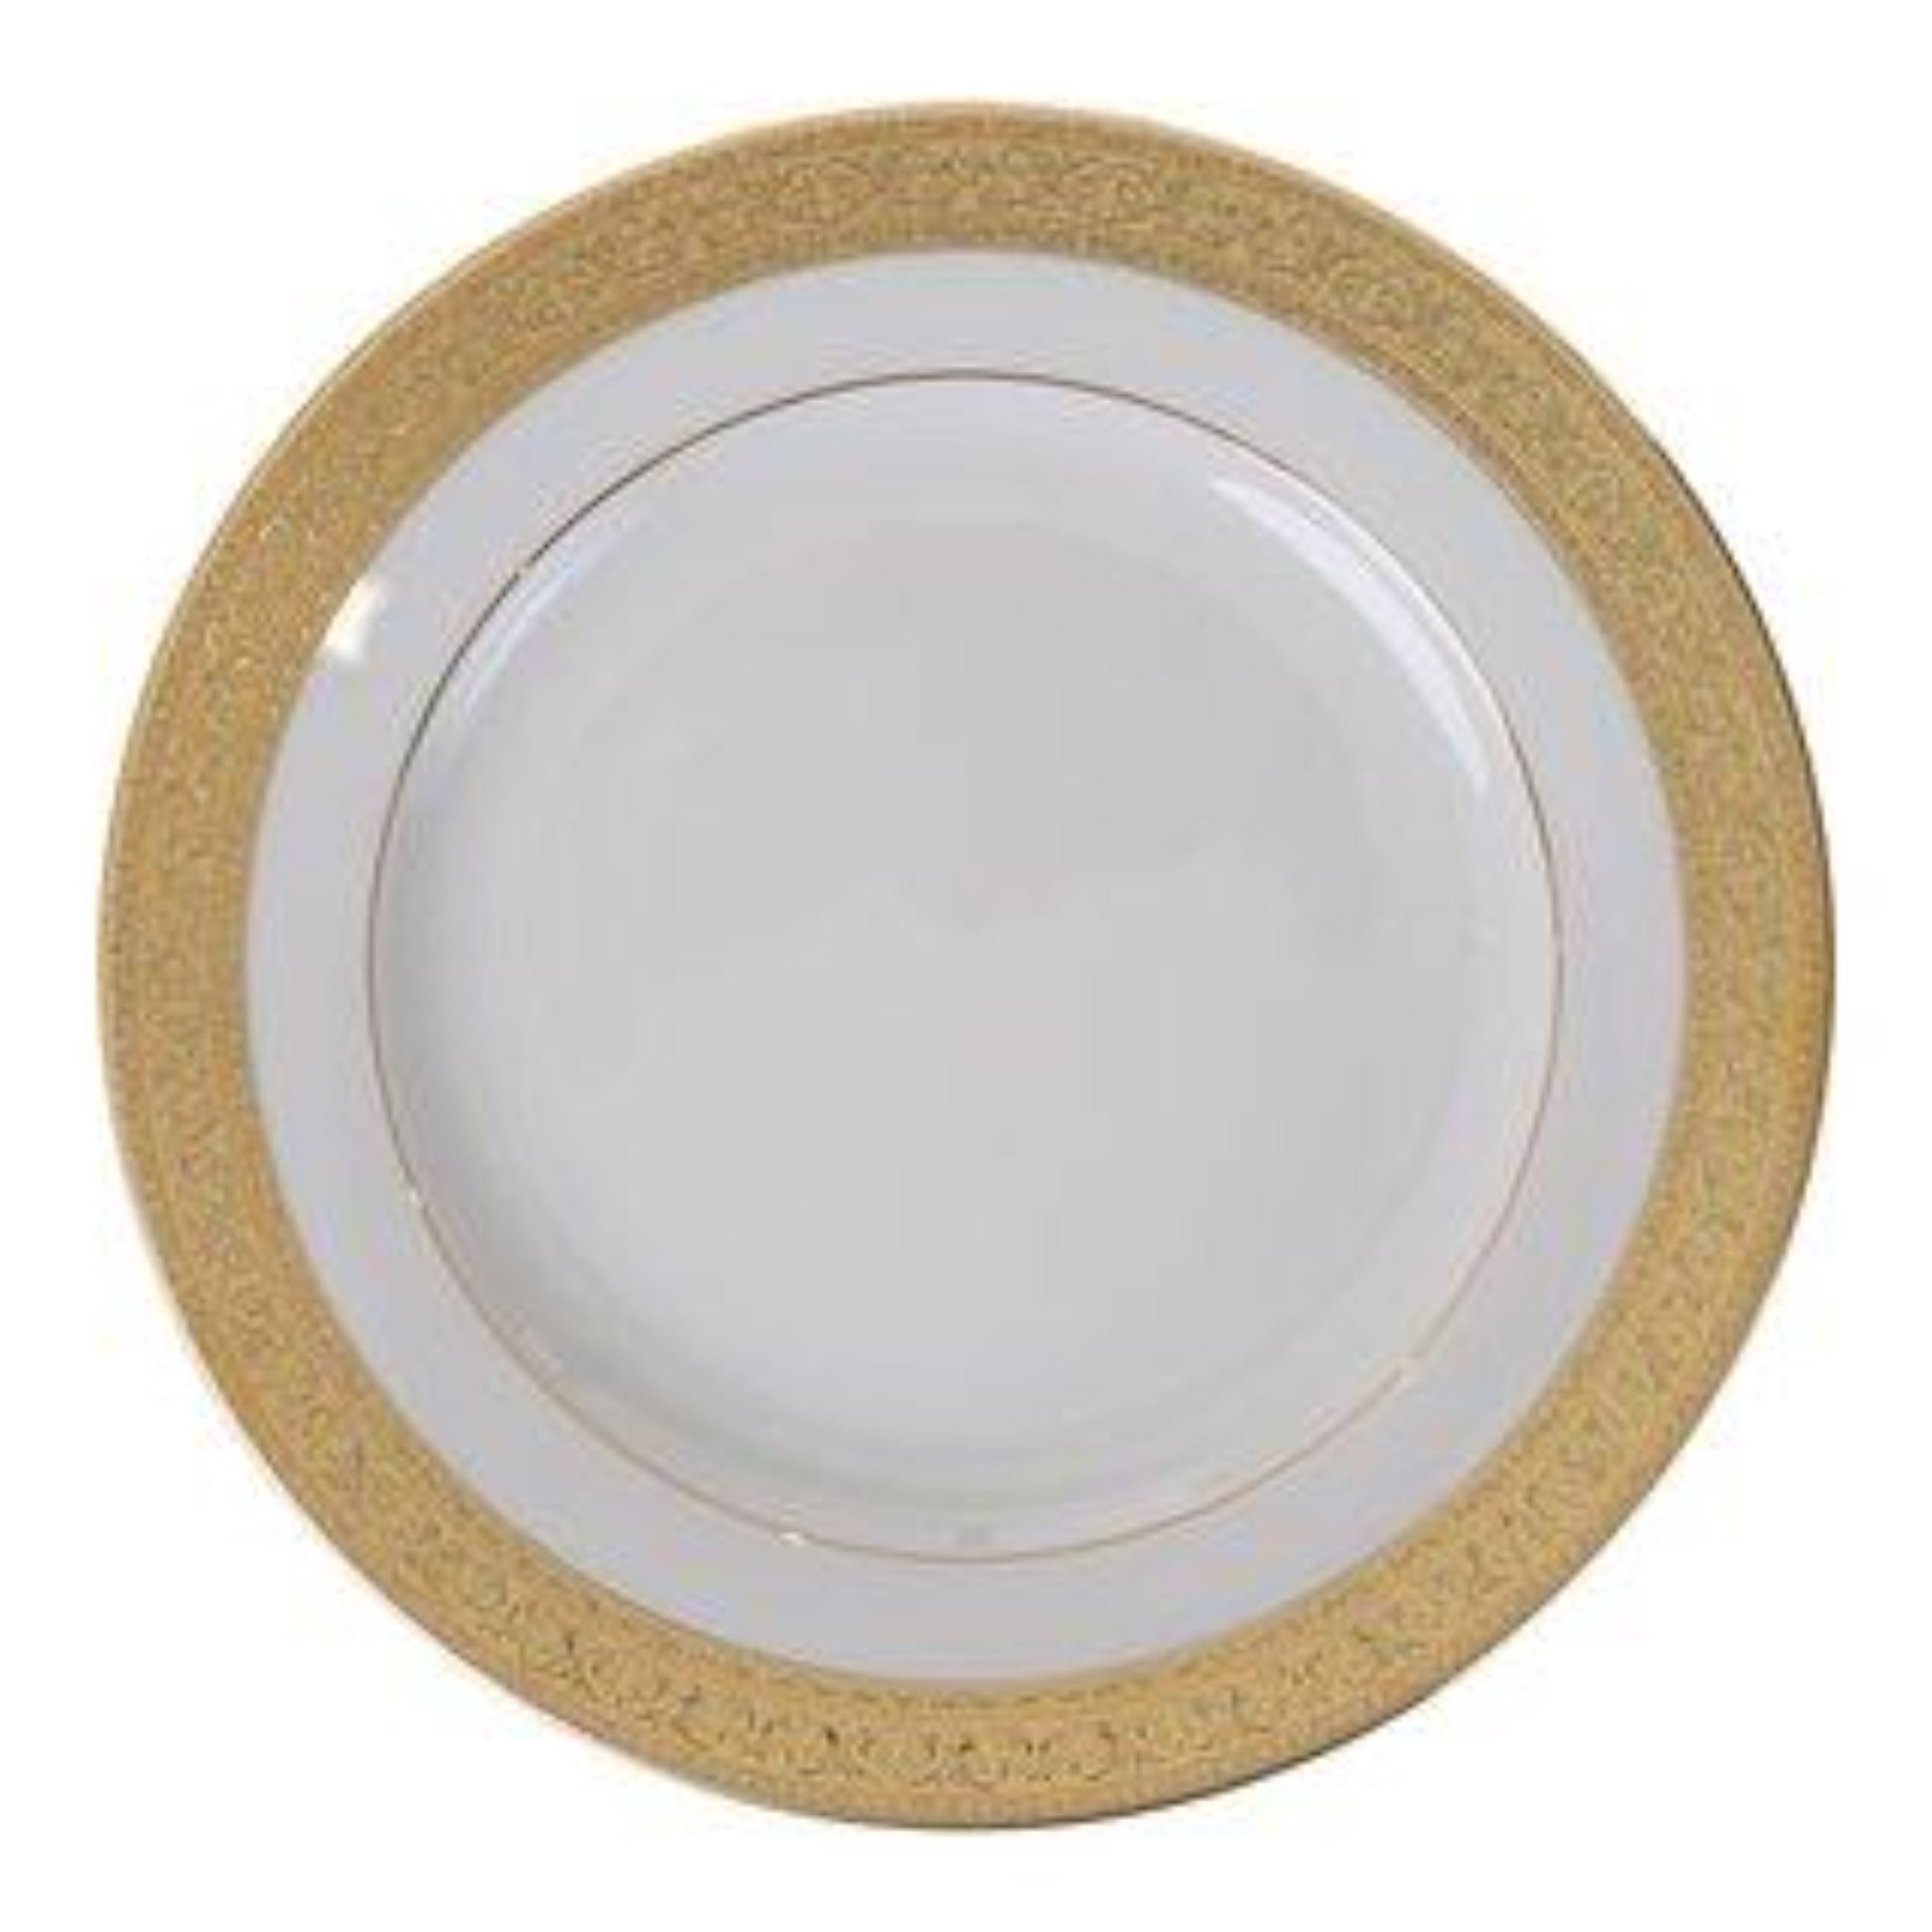 Falkenporzellan Dinner Set 112pcs - Porcelain - Gold - 1300026